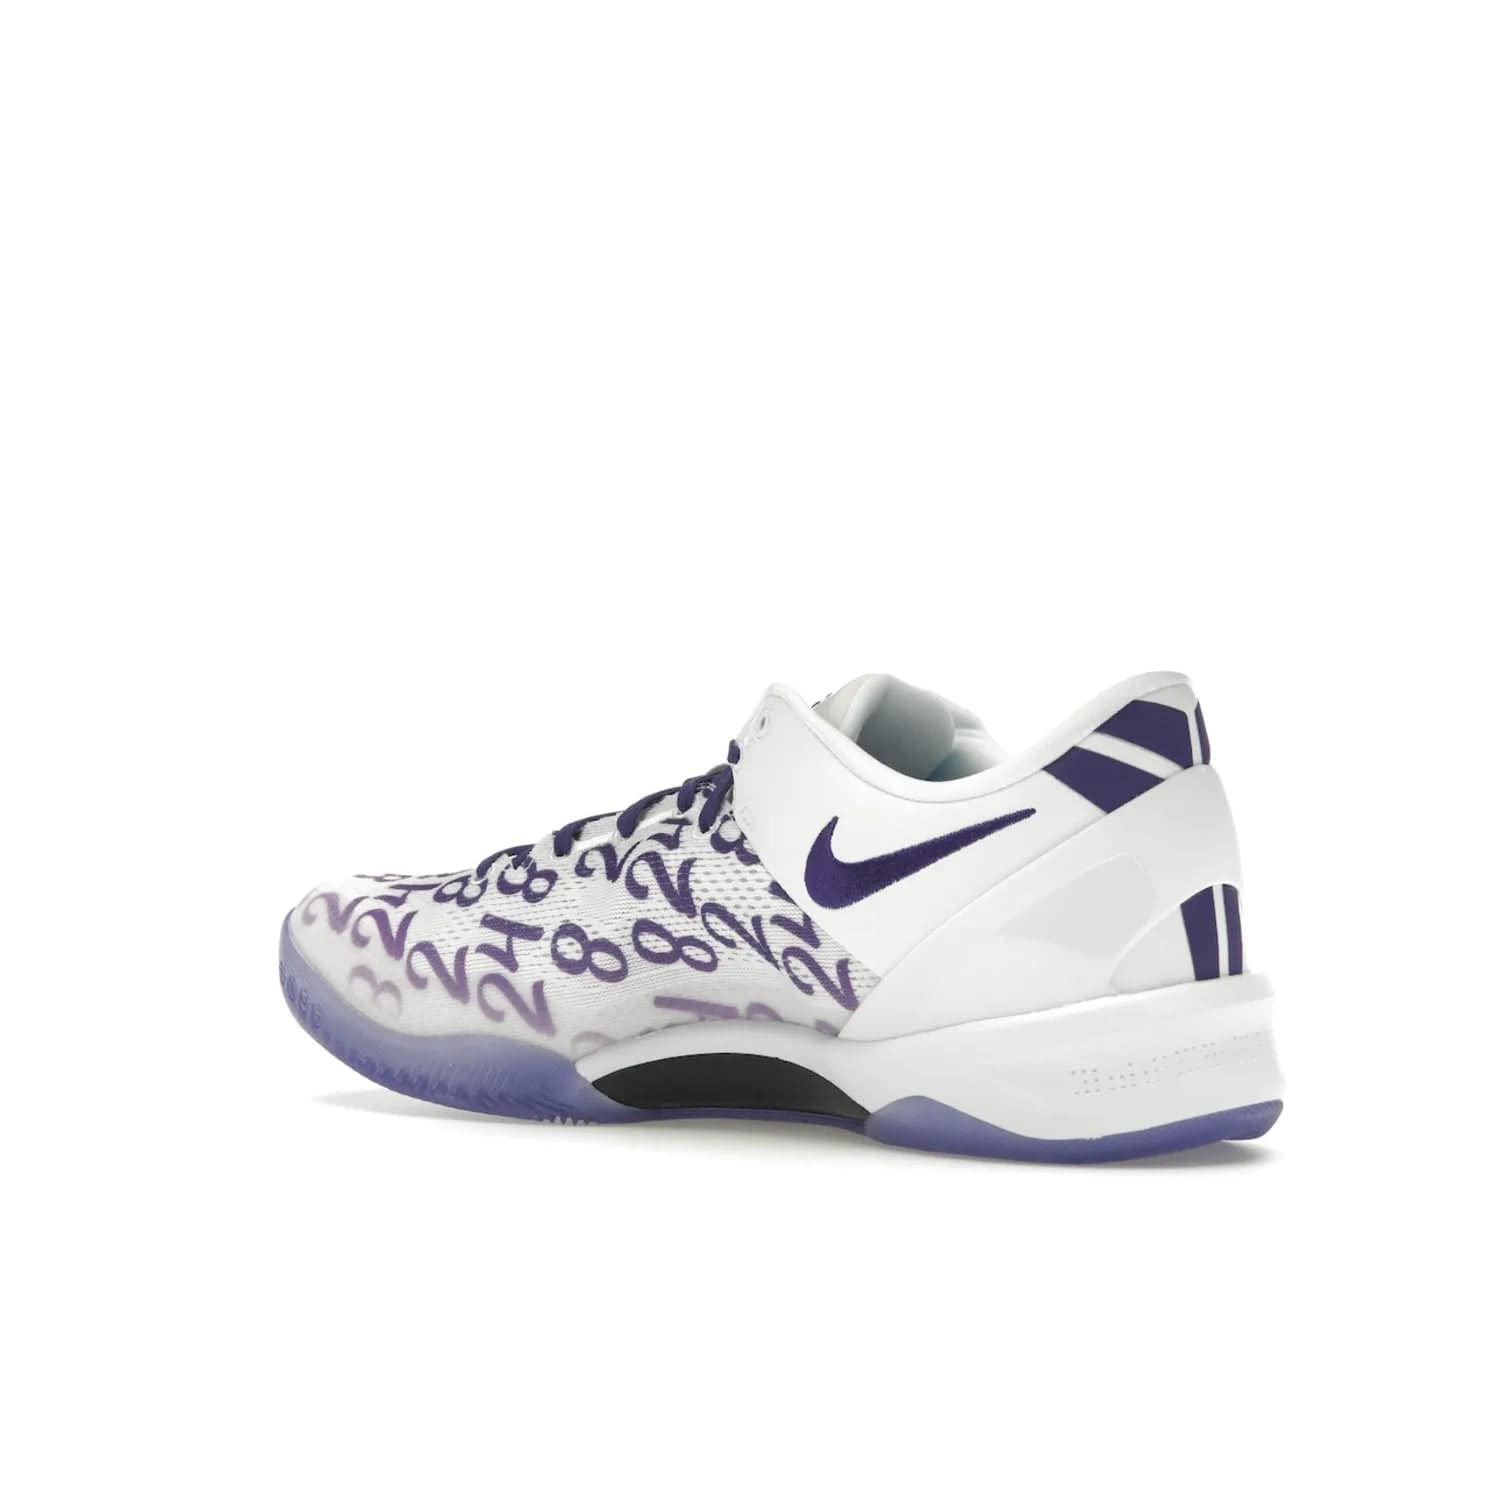 Nike Kobe 8 Protro Court Purple - Image 23 - Only at www.BallersClubKickz.com - 